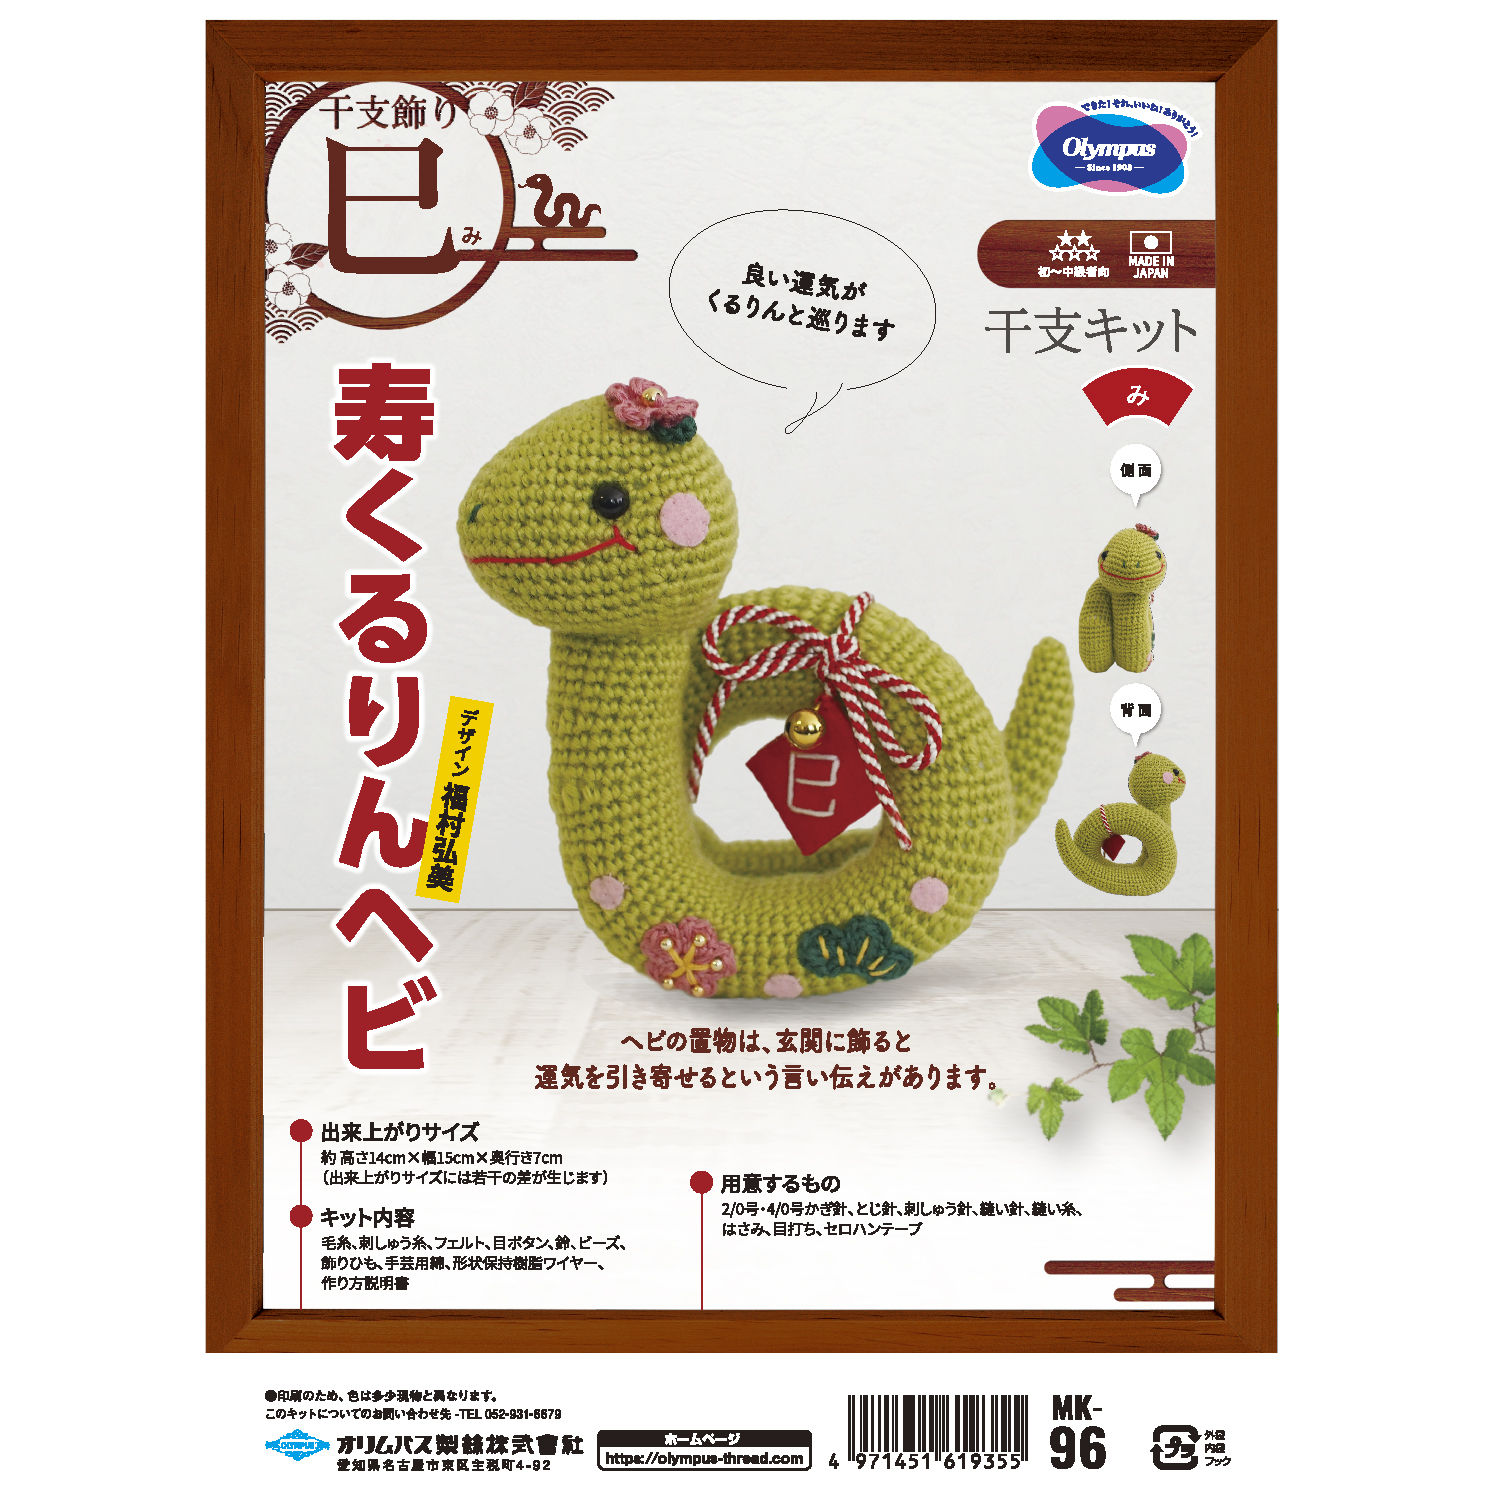 OLY-MK96 Kotobuki Kururin Snake Amigurumi Zodiac Kit (bag)